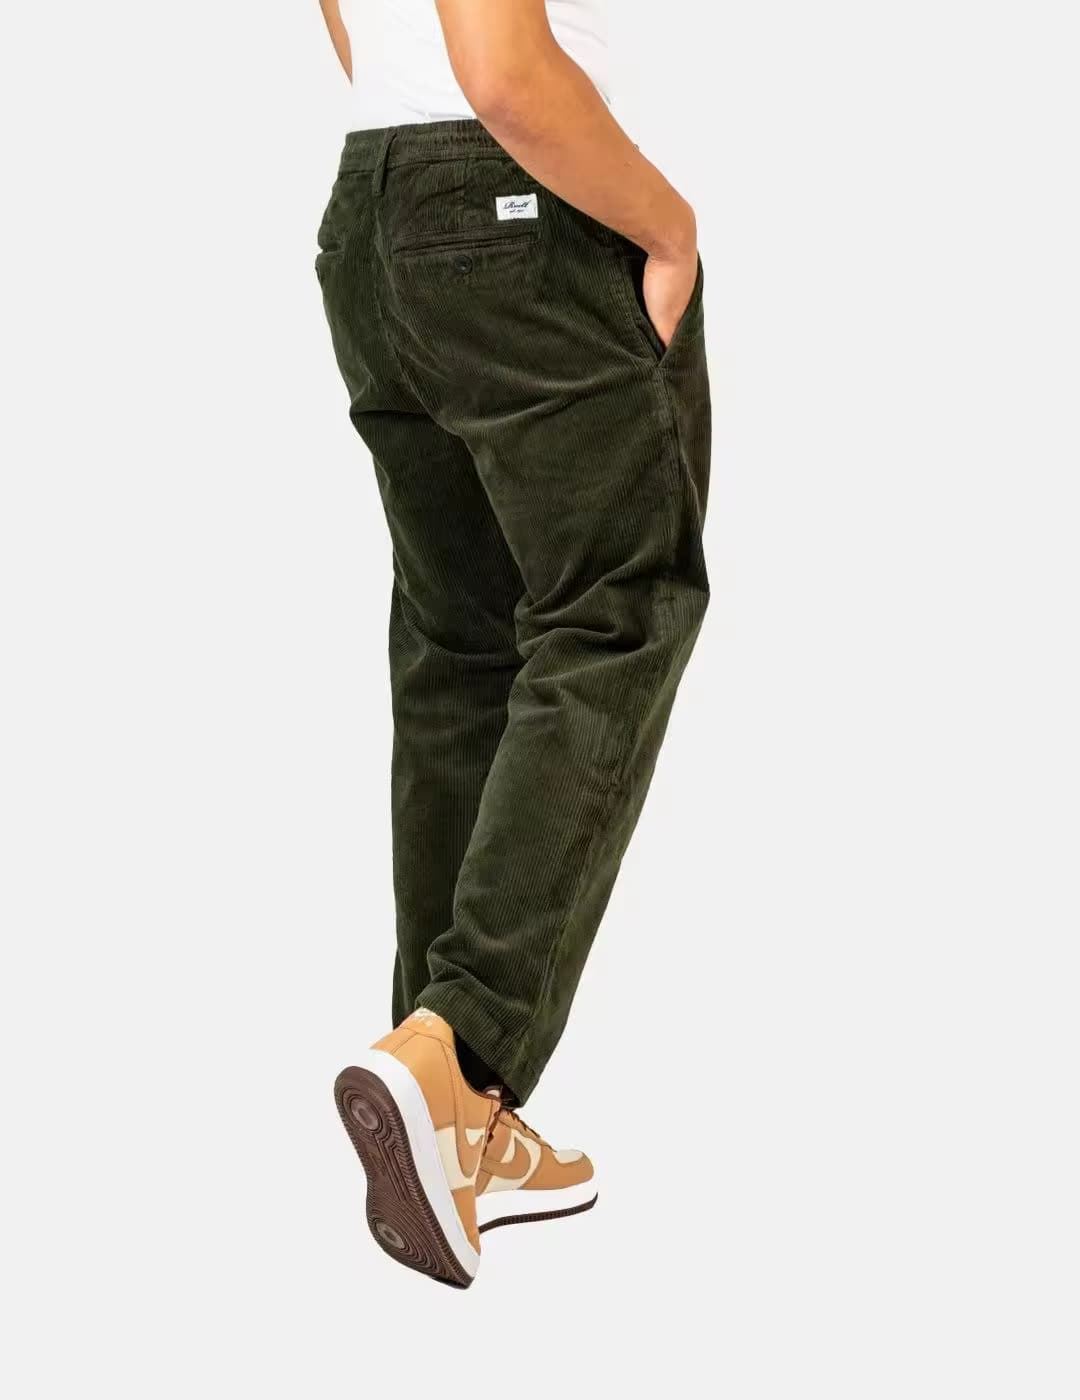 Pantalon REELL REFLEX LOOSE CHINO DARK GREEN - Imagen 2